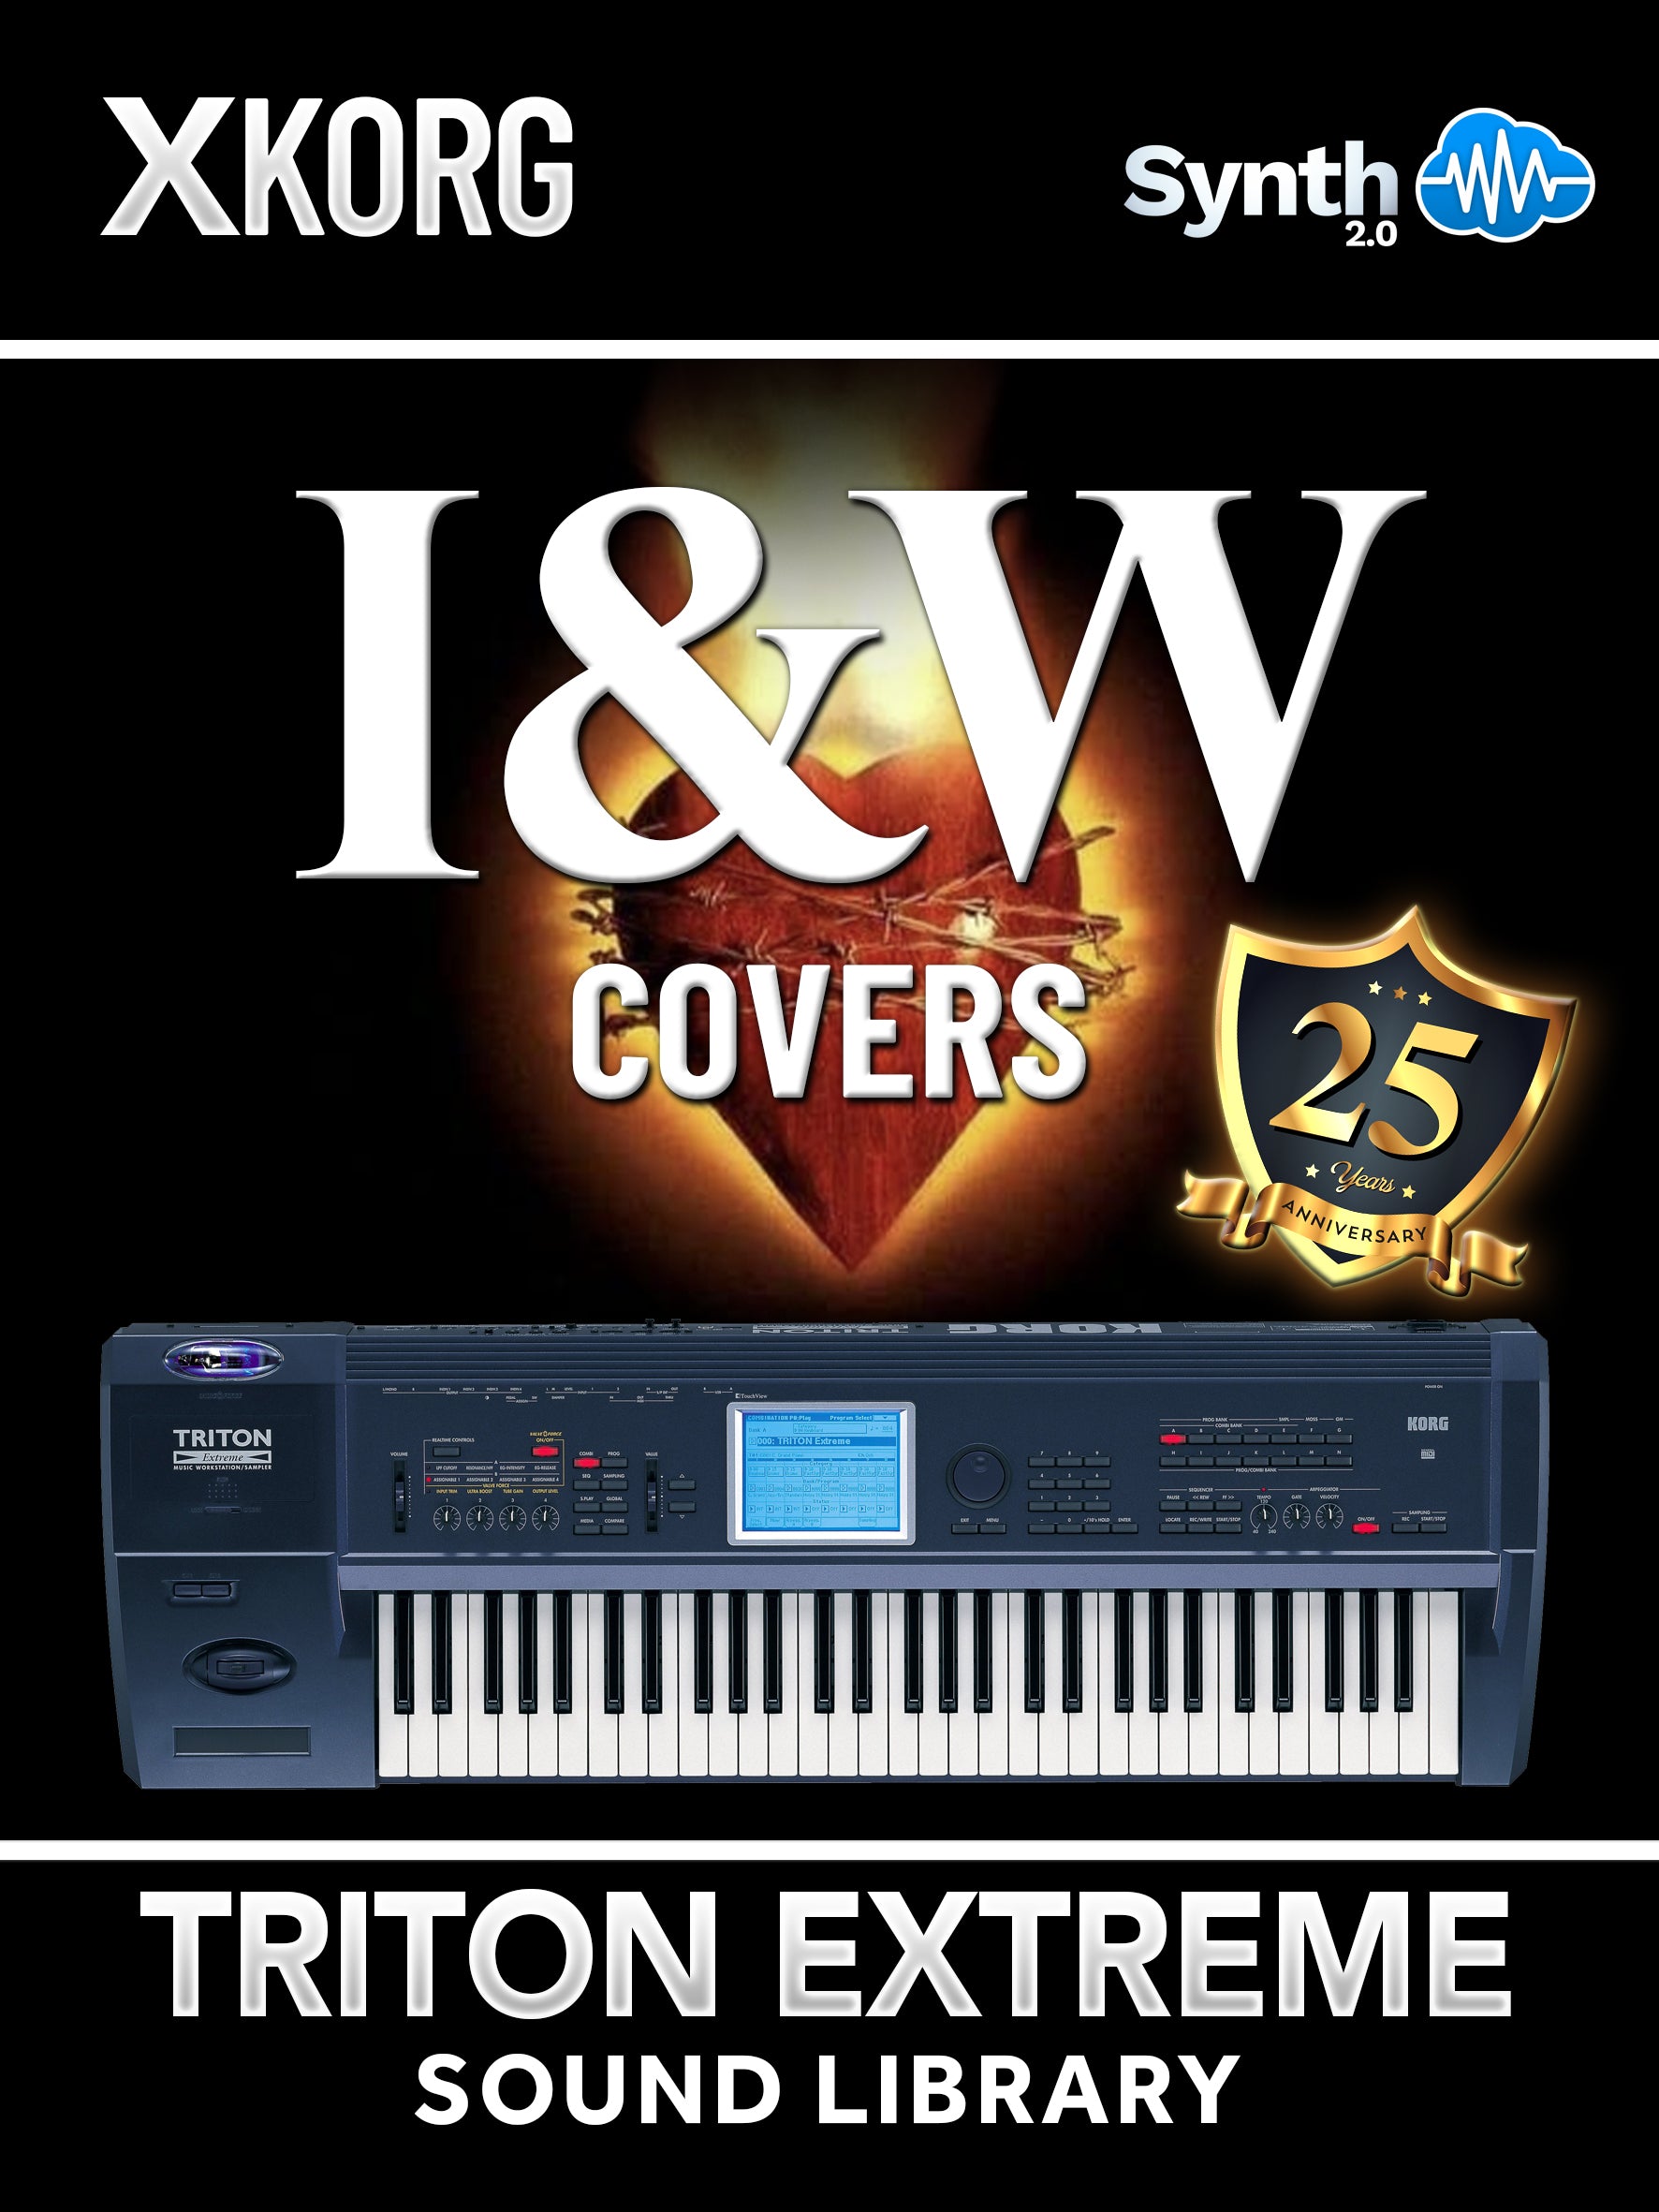 SSX105 - I&W Covers / 25th Anniversary - Korg Triton EXTREME